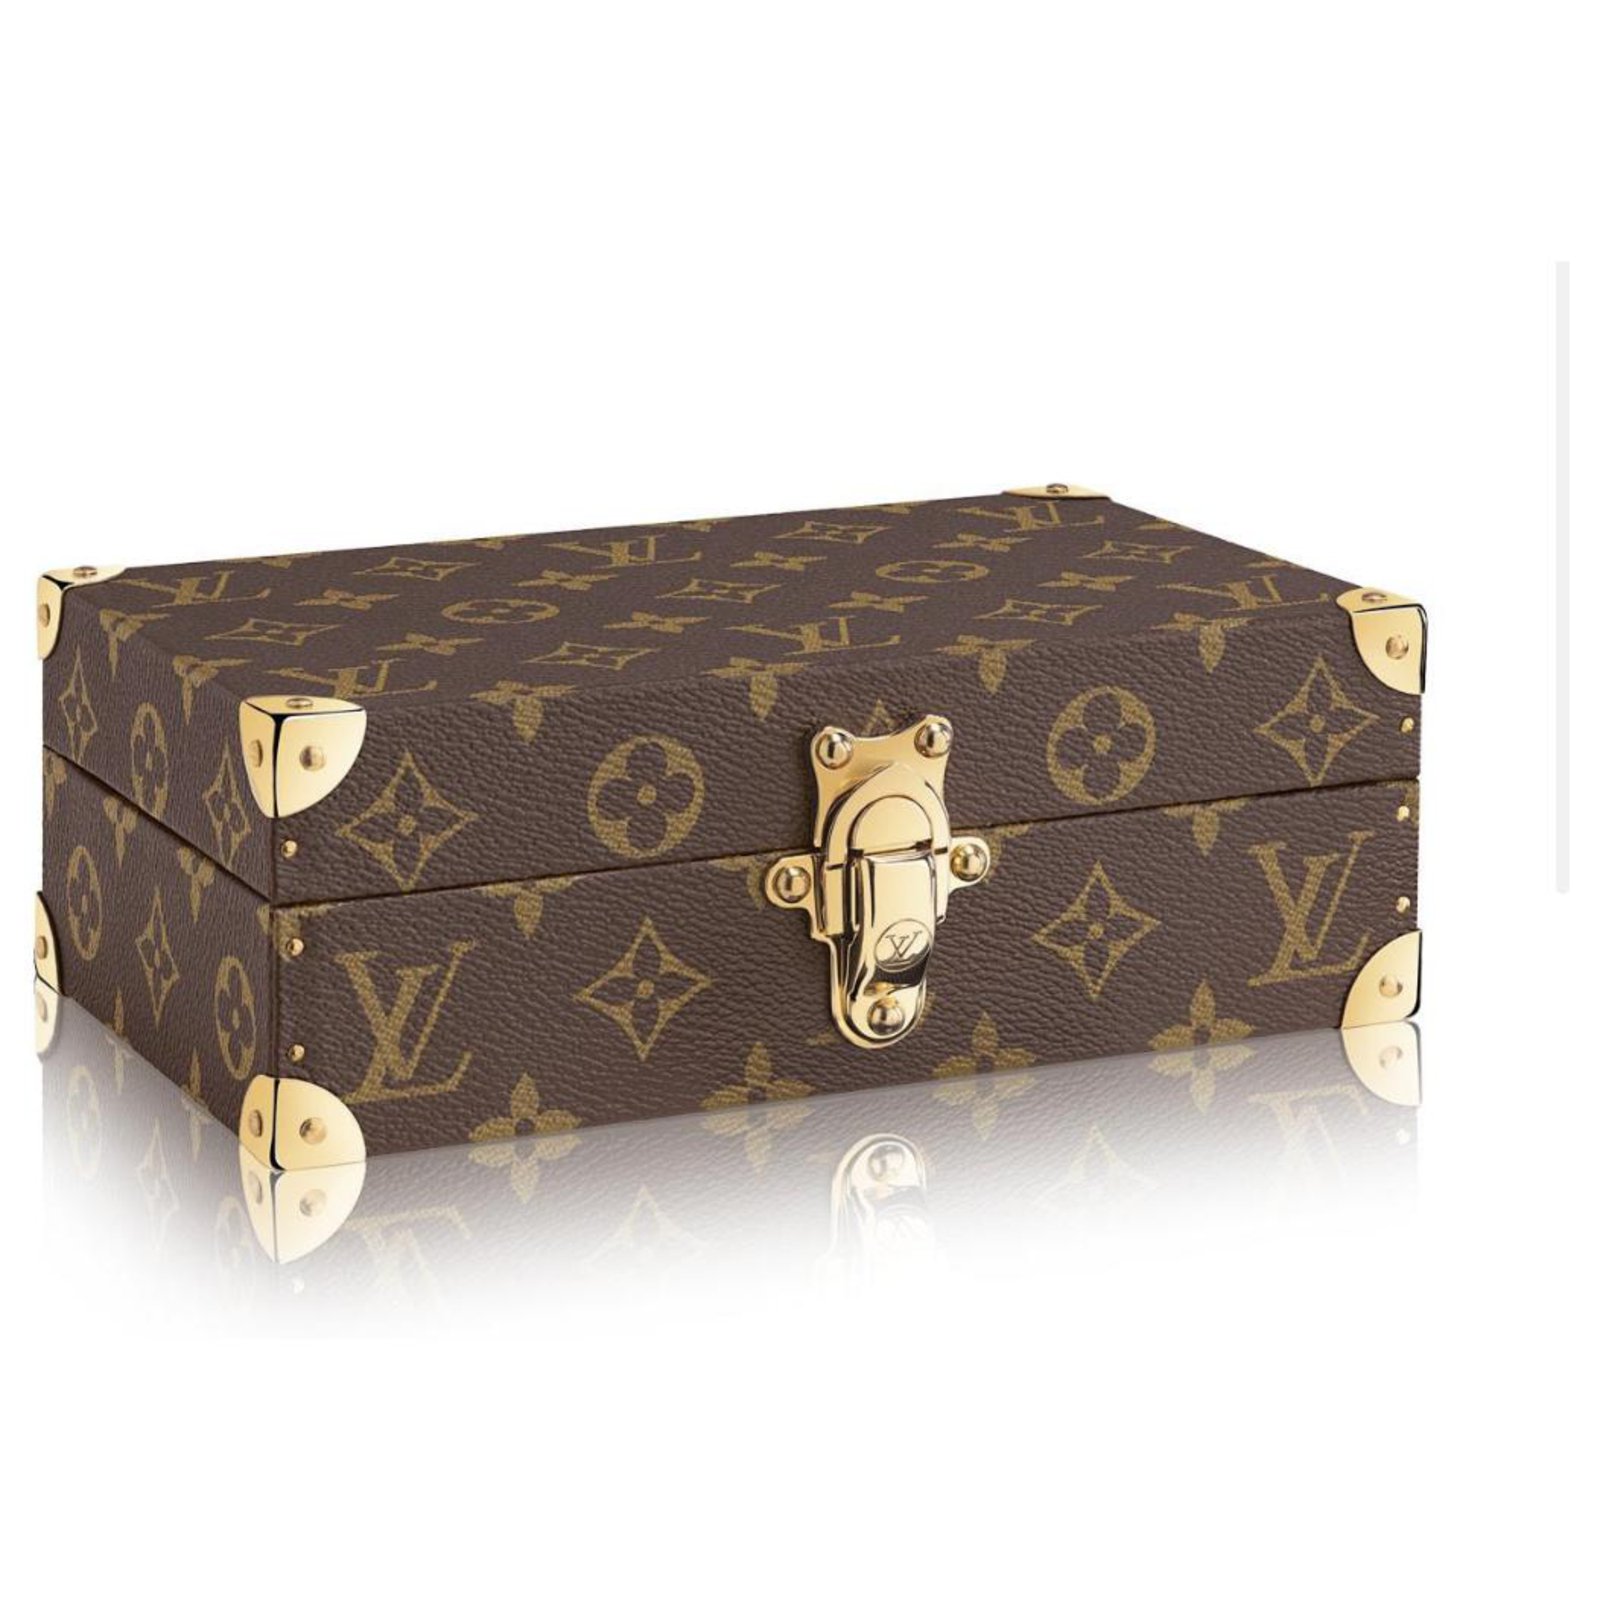 Auténtica caja estilo cajón vacío con letras doradas Louis Vuitton 8x  5,25 x 1,5